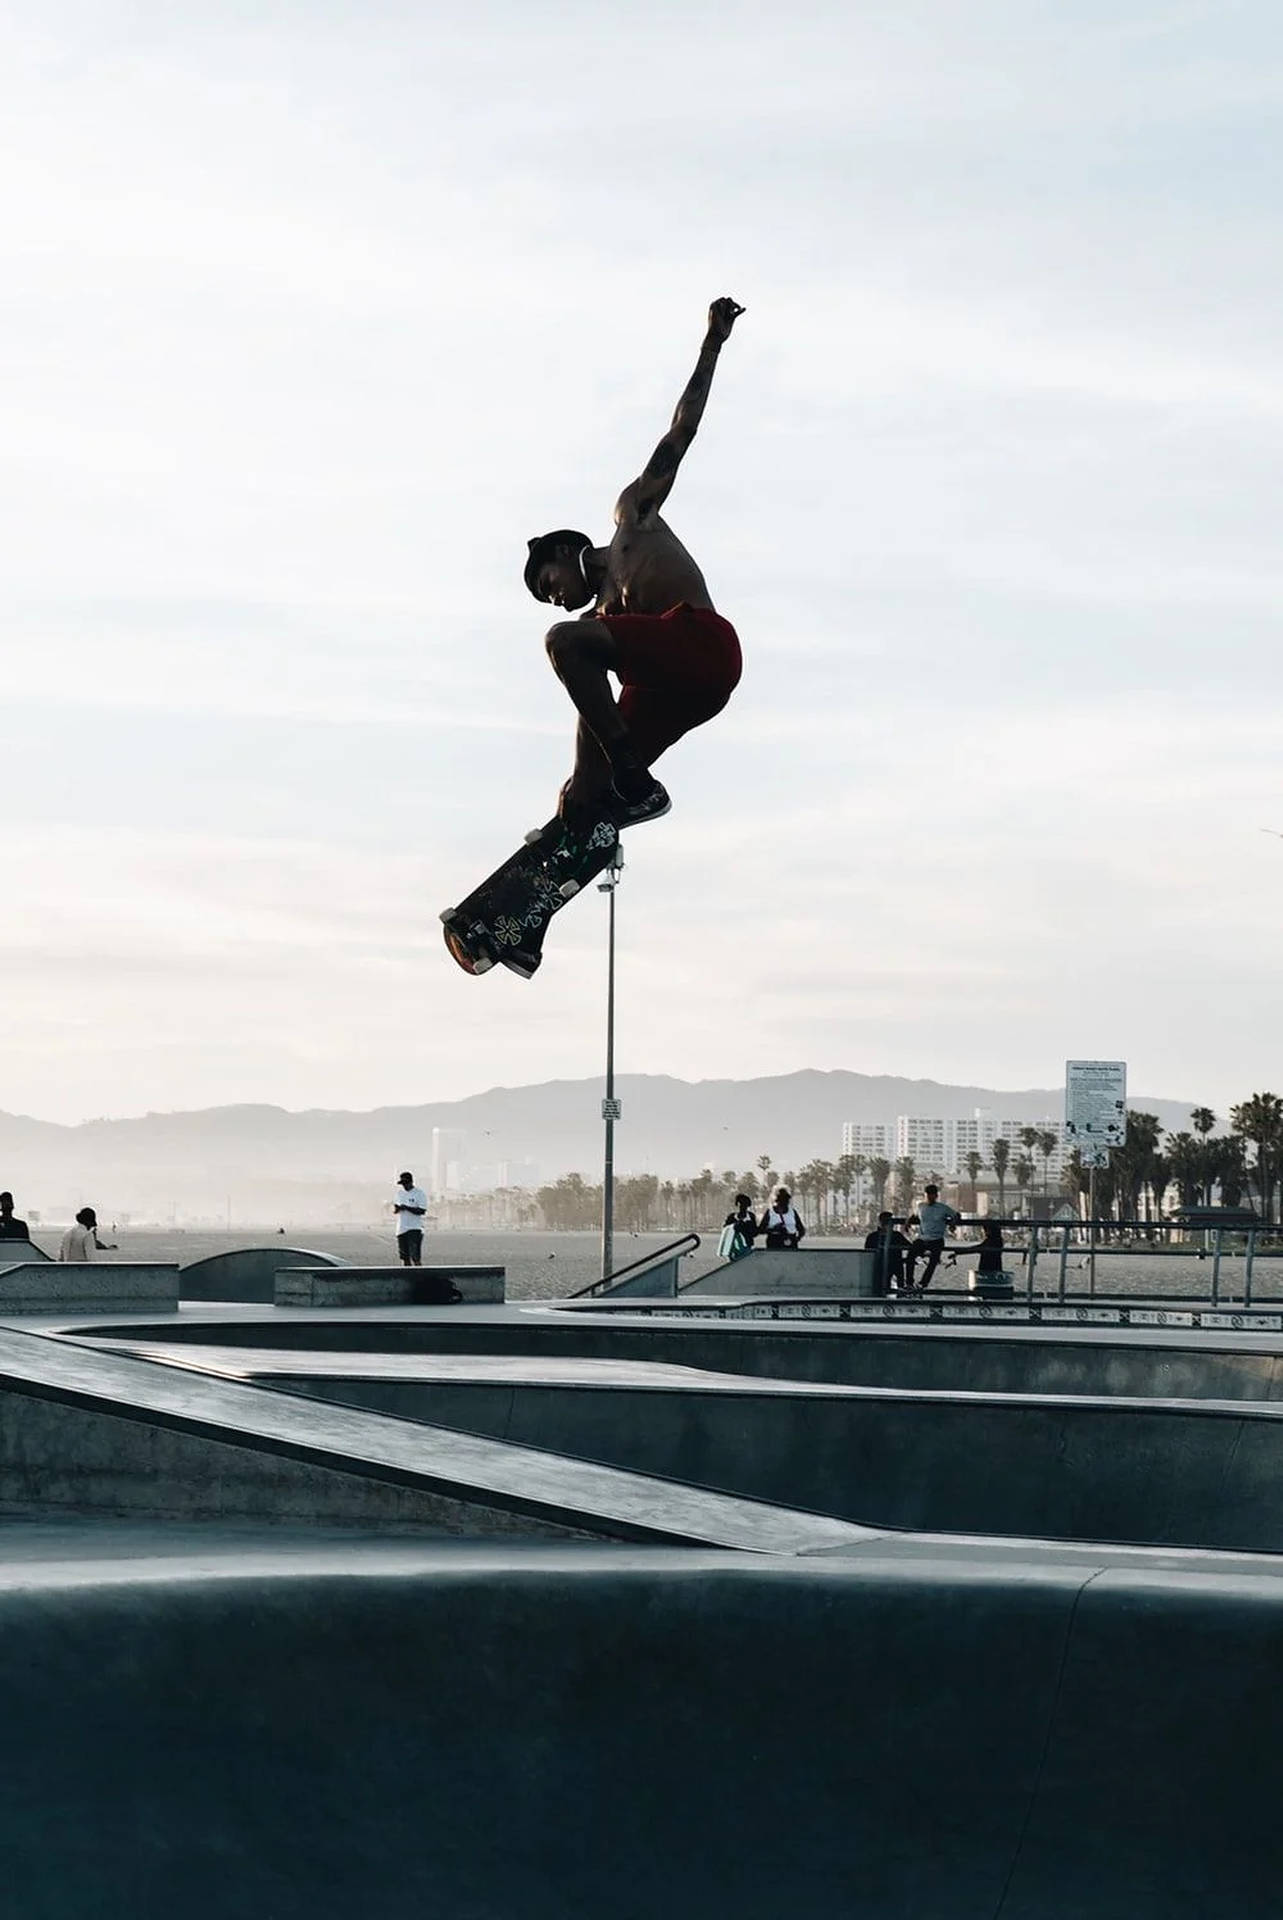 Captivating Skater Boy Performing Midair Trick